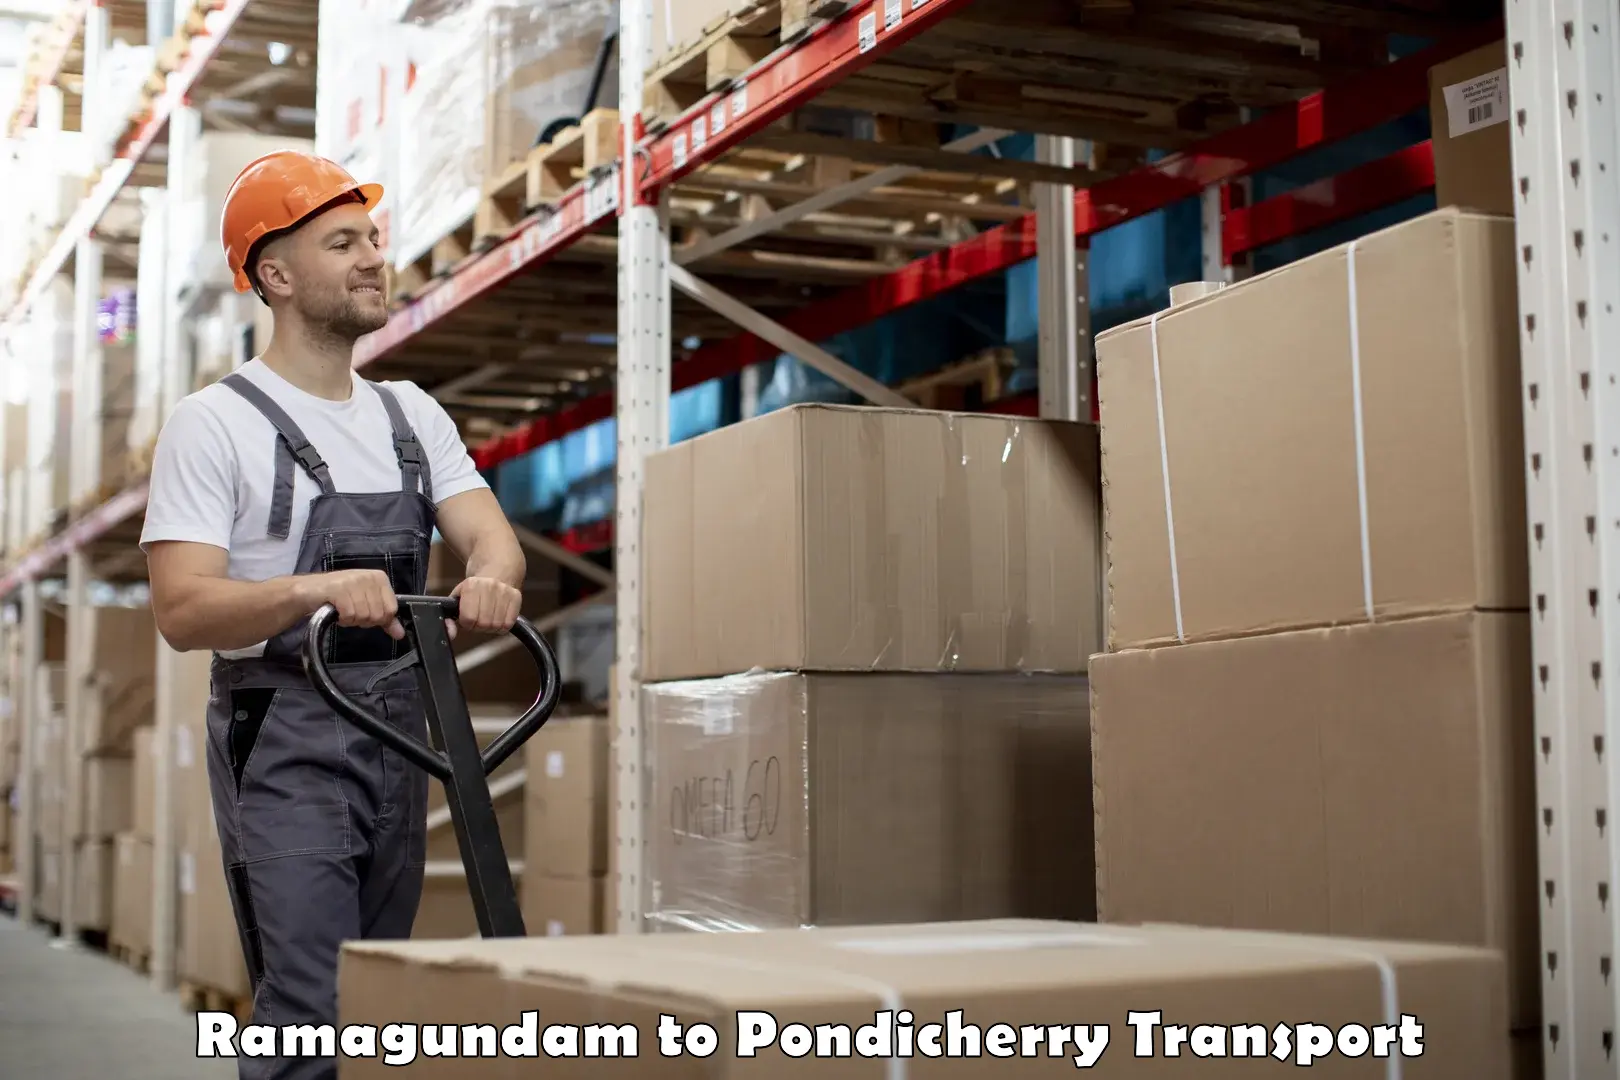 Truck transport companies in India Ramagundam to Pondicherry